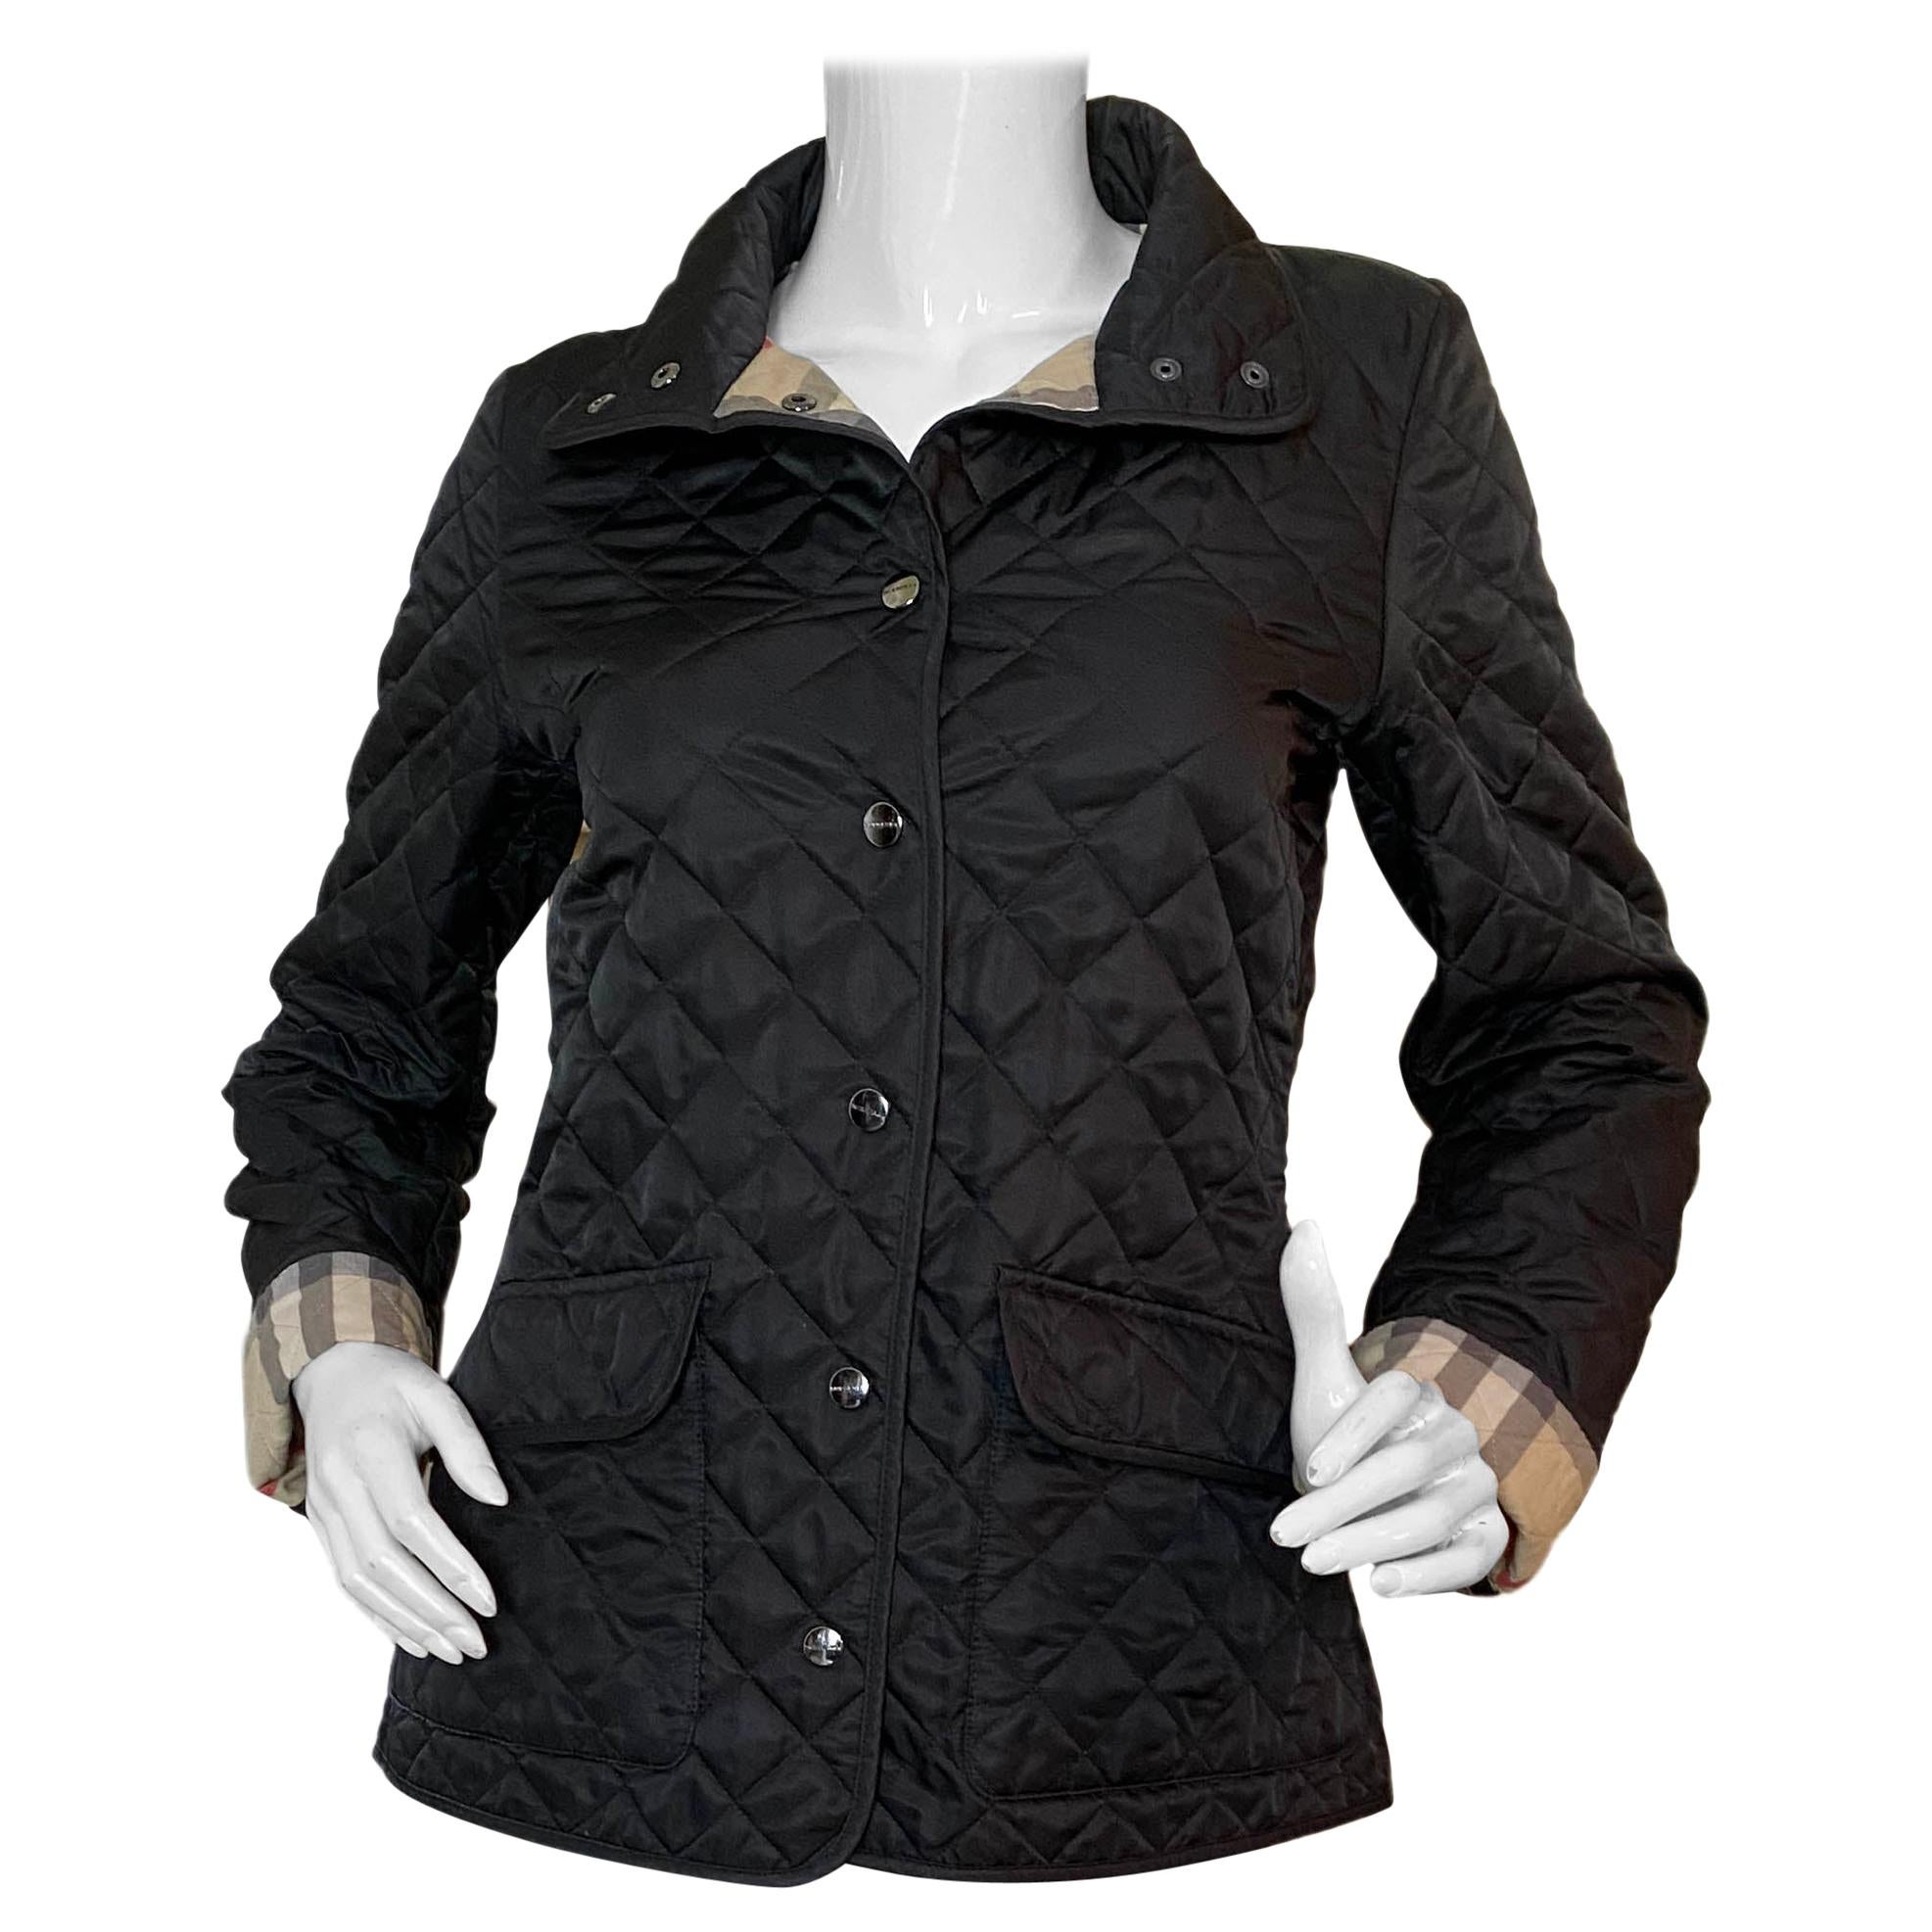 Burberry Brit Black Quilted Jacket w/Nova Plaid Lining sz Small